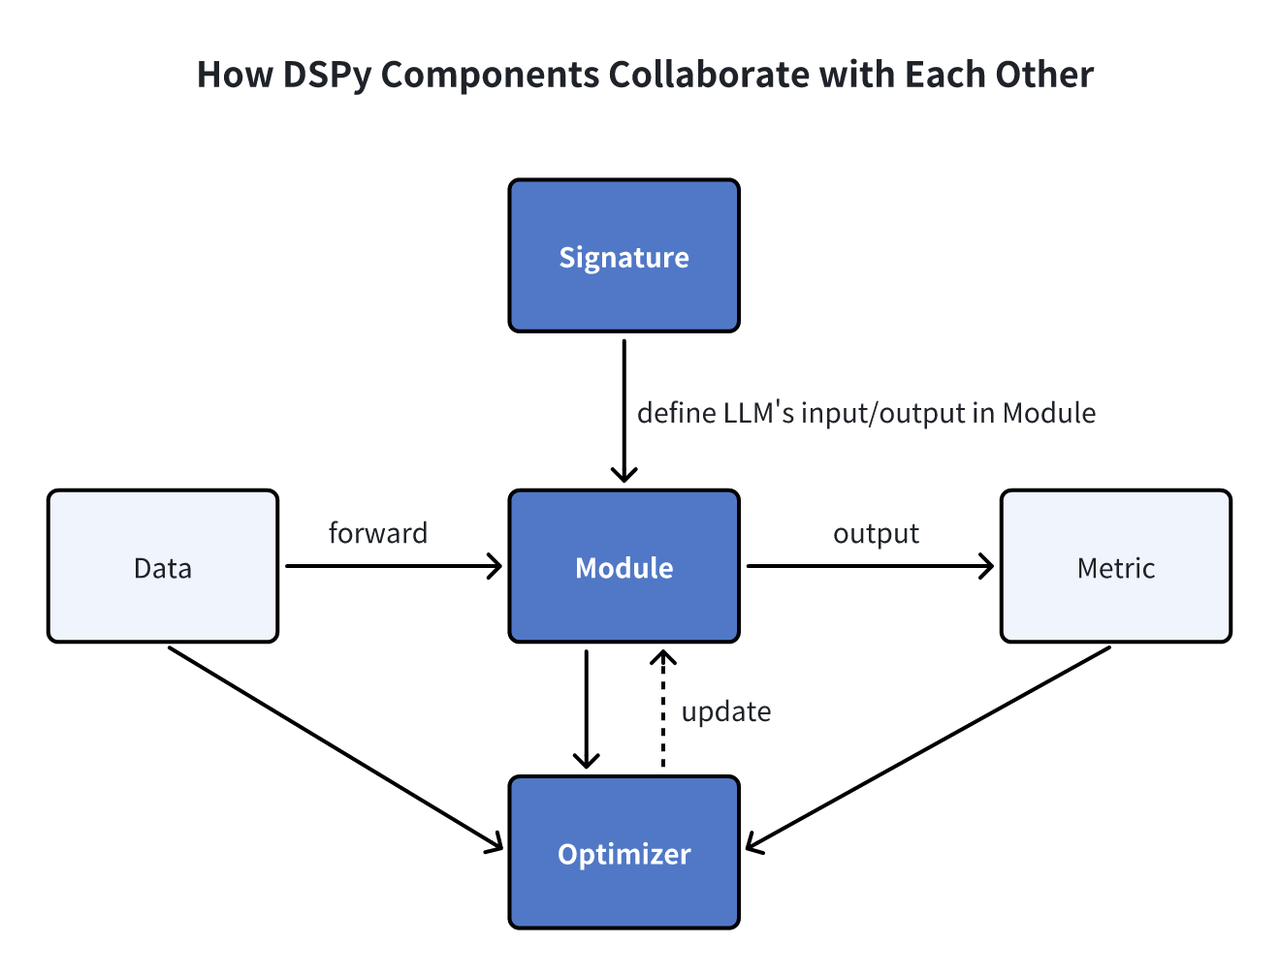 DSPy Modules